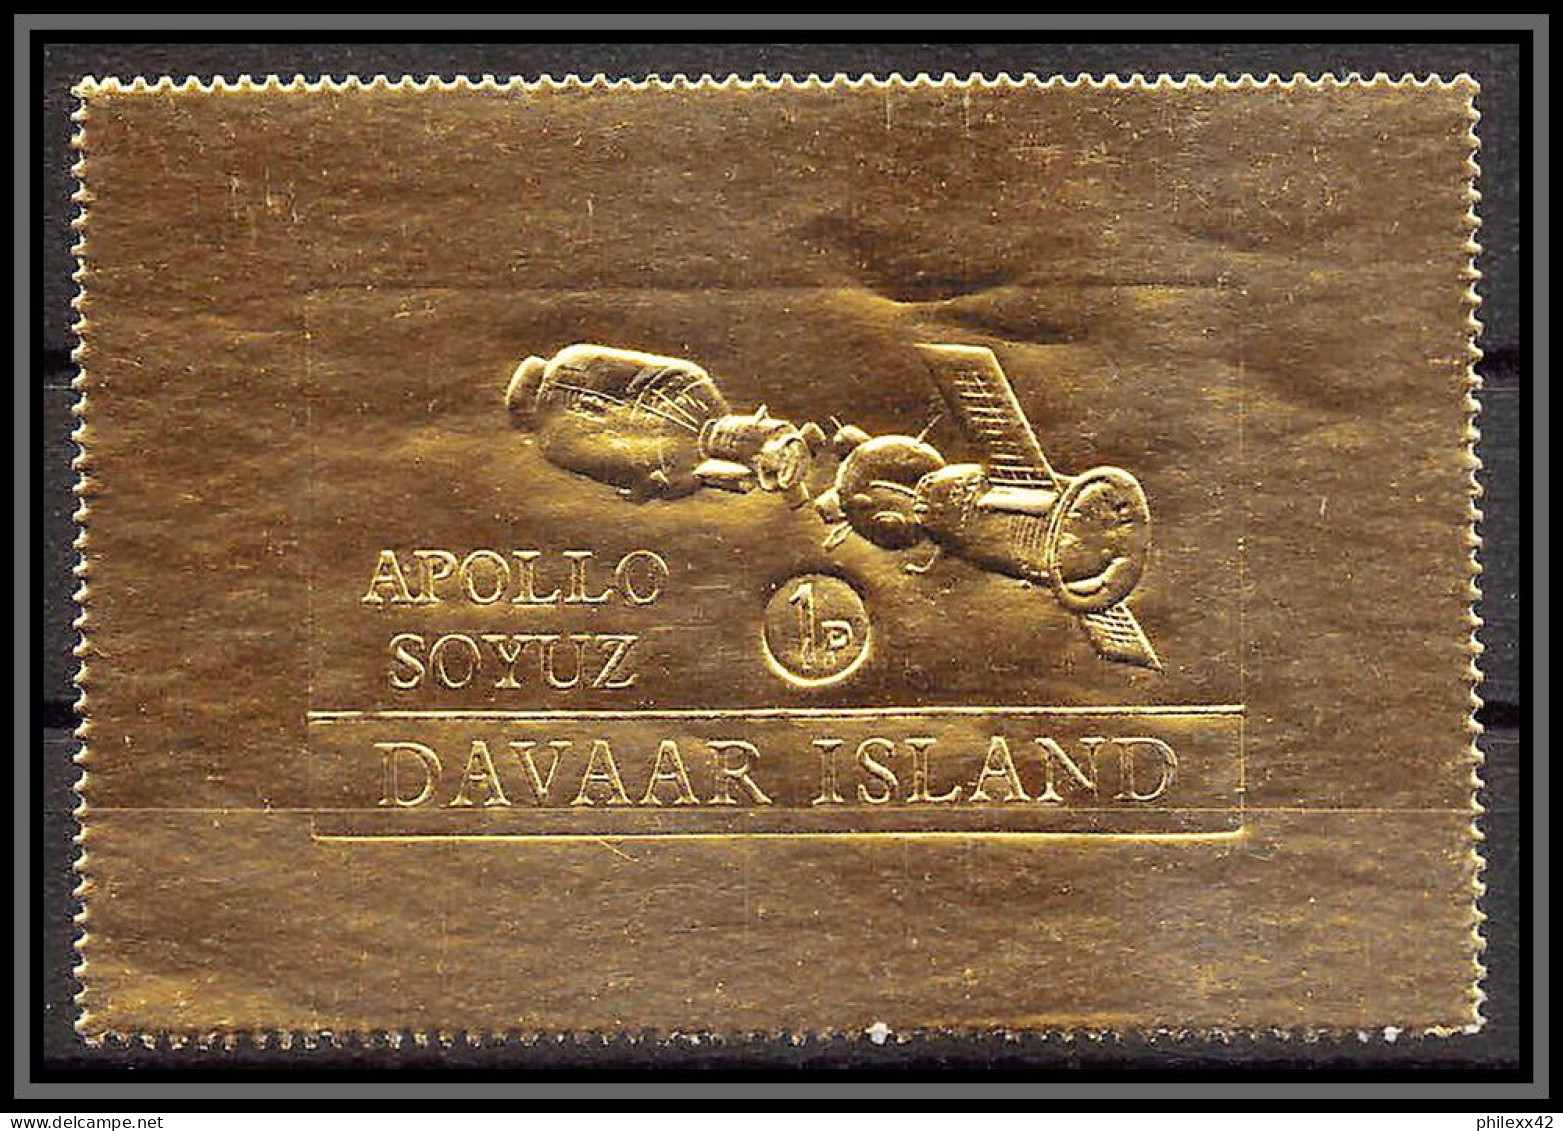 310b Davaar Scotland Apollo 1 P Soyuz (soyouz Sojus) Timbres OR Gold Stamps Géant Large - Scozia